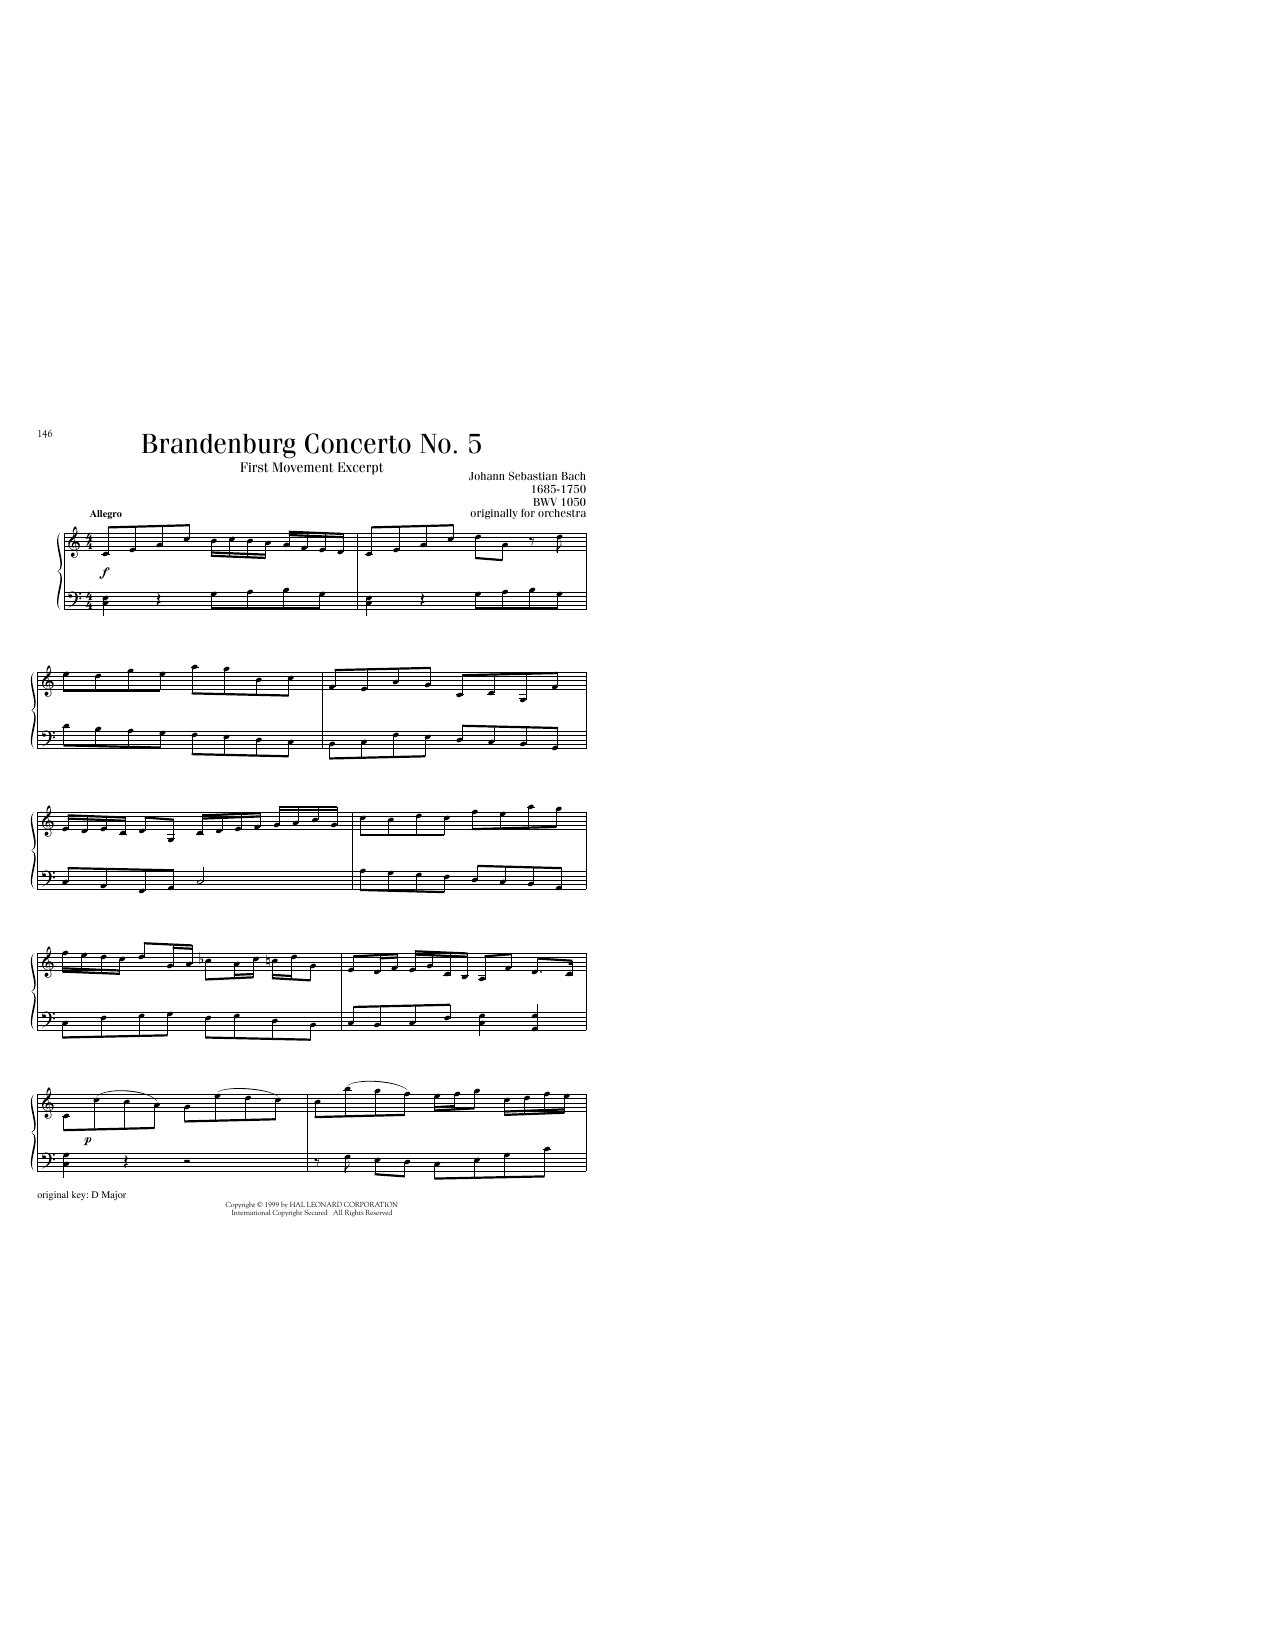 Johann Sebastian Bach Brandenburg Concerto No. 5 in D Major, First Movement Excerpt sheet music notes printable PDF score